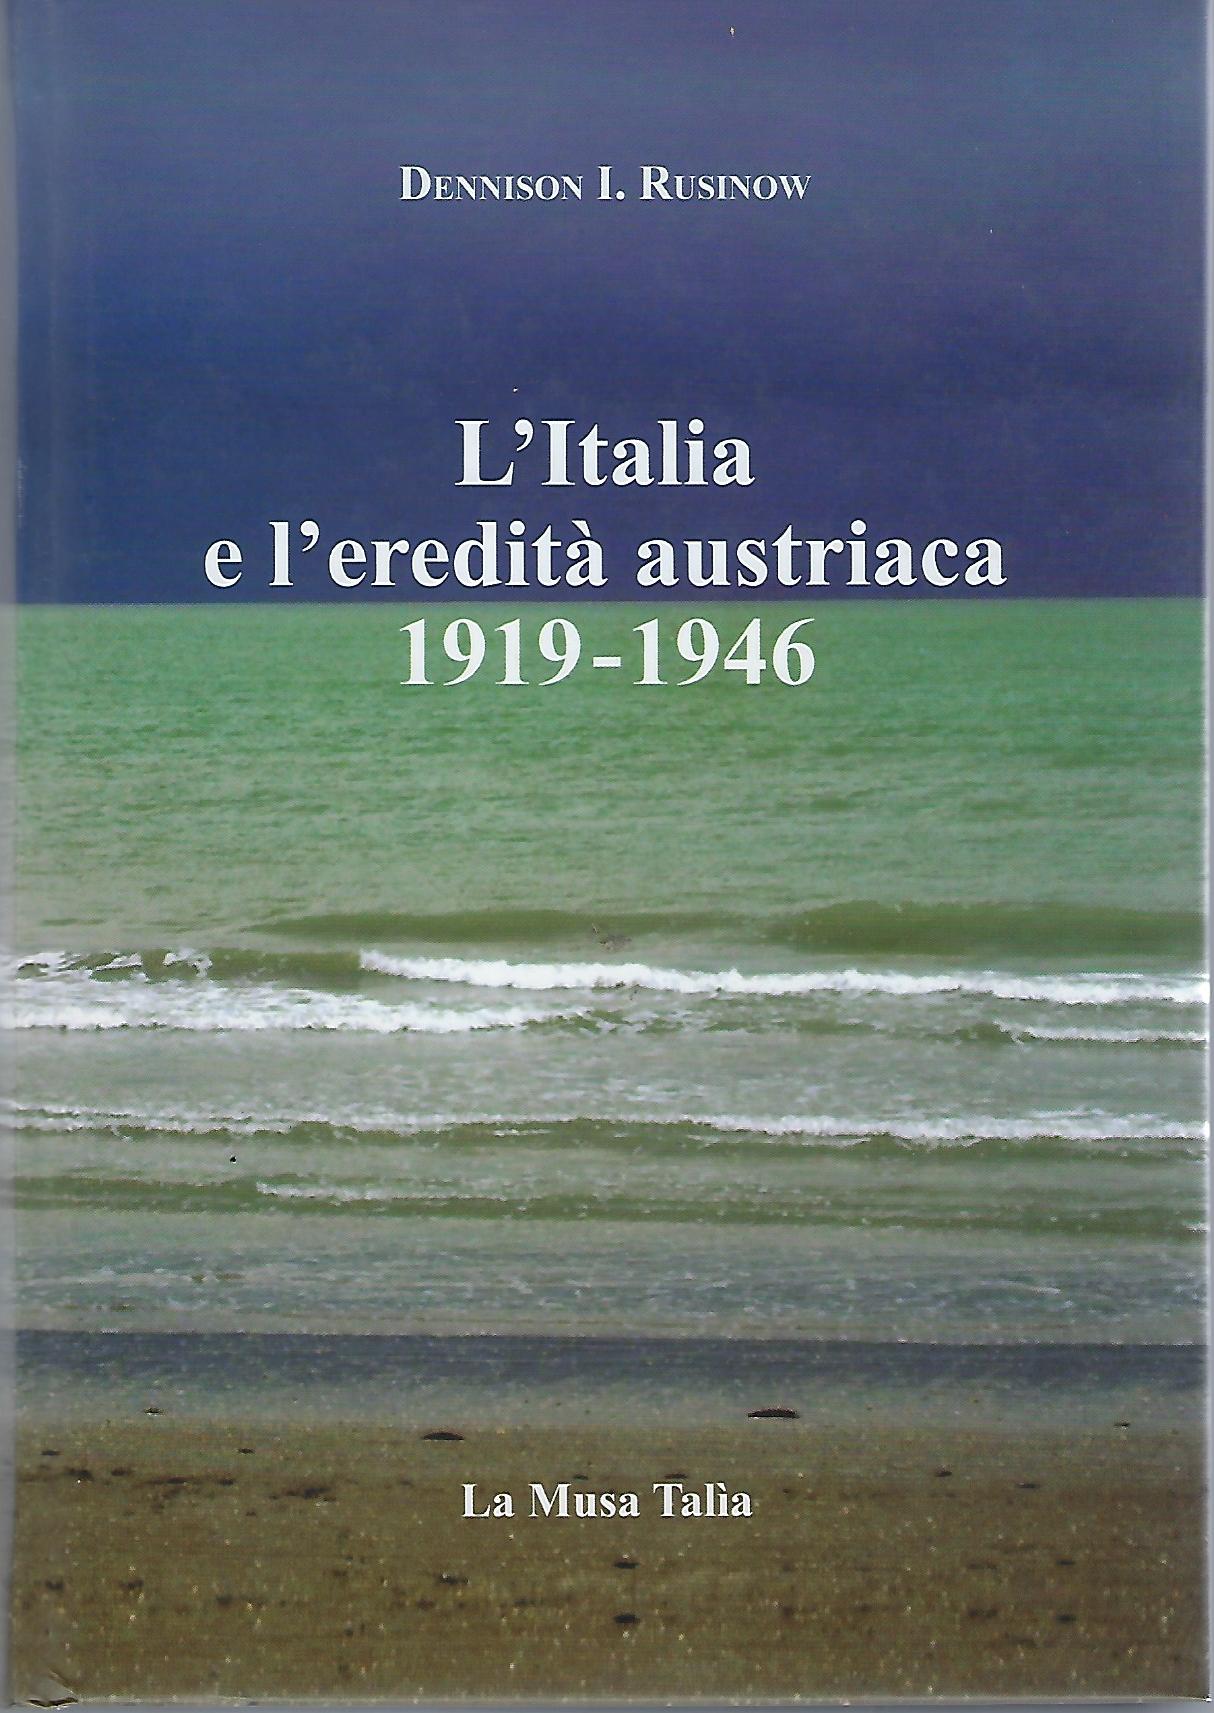 "L'Italia e l'eredità austriaca 1919-1946"